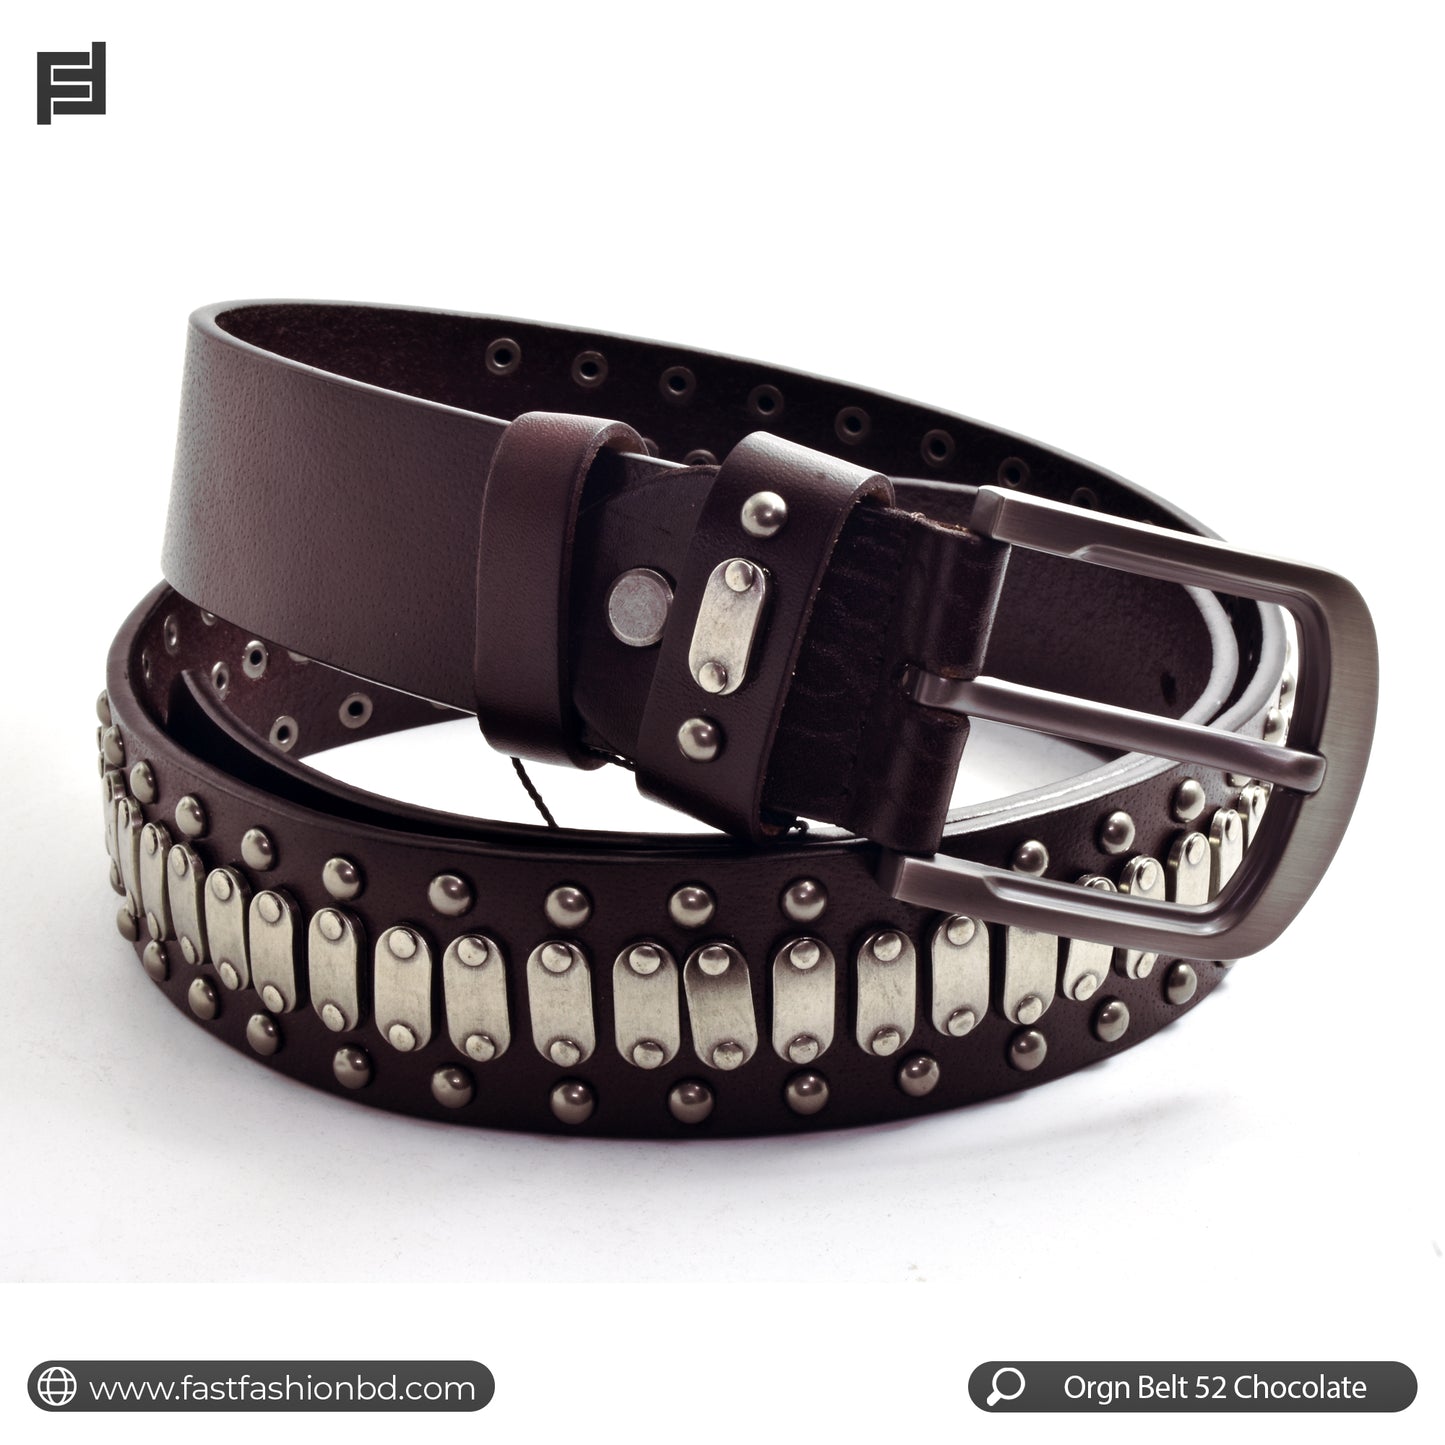 Premium Quality Original Leather Belt - ORGN Belt 52